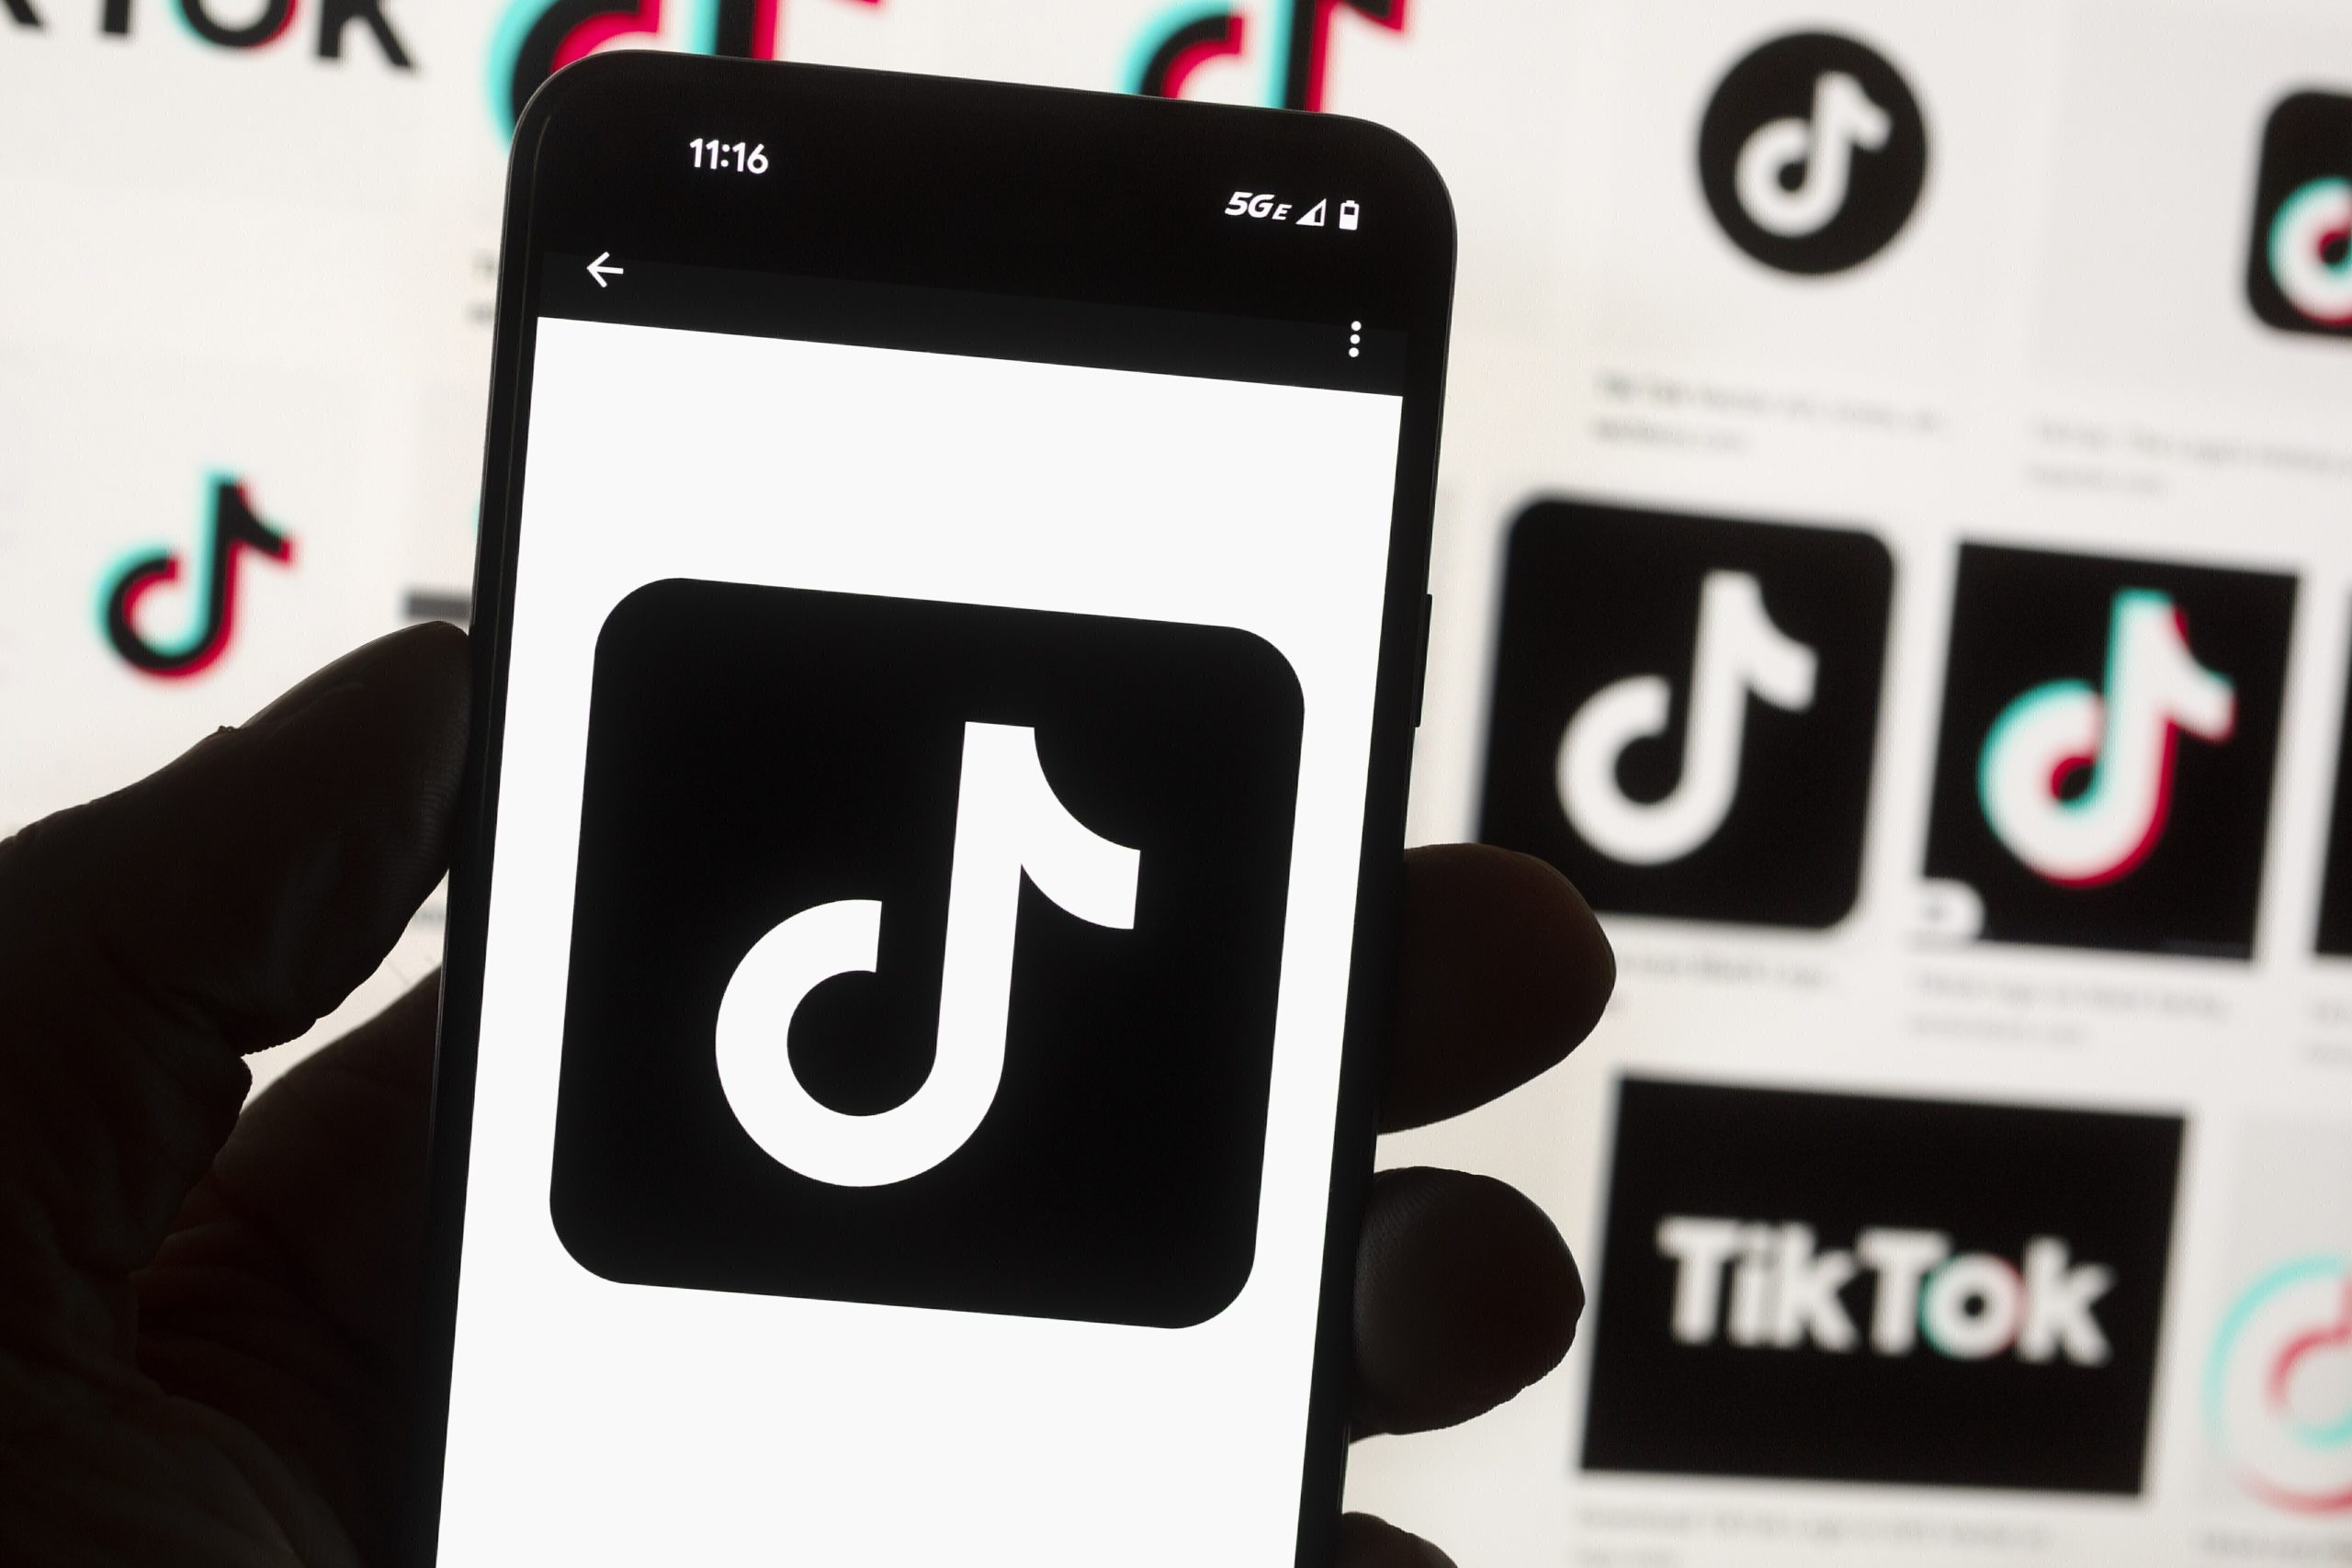 The TikTok logo is displayed on a cellphone in Boston, Massachusetts, on Oct. 14, 2022.